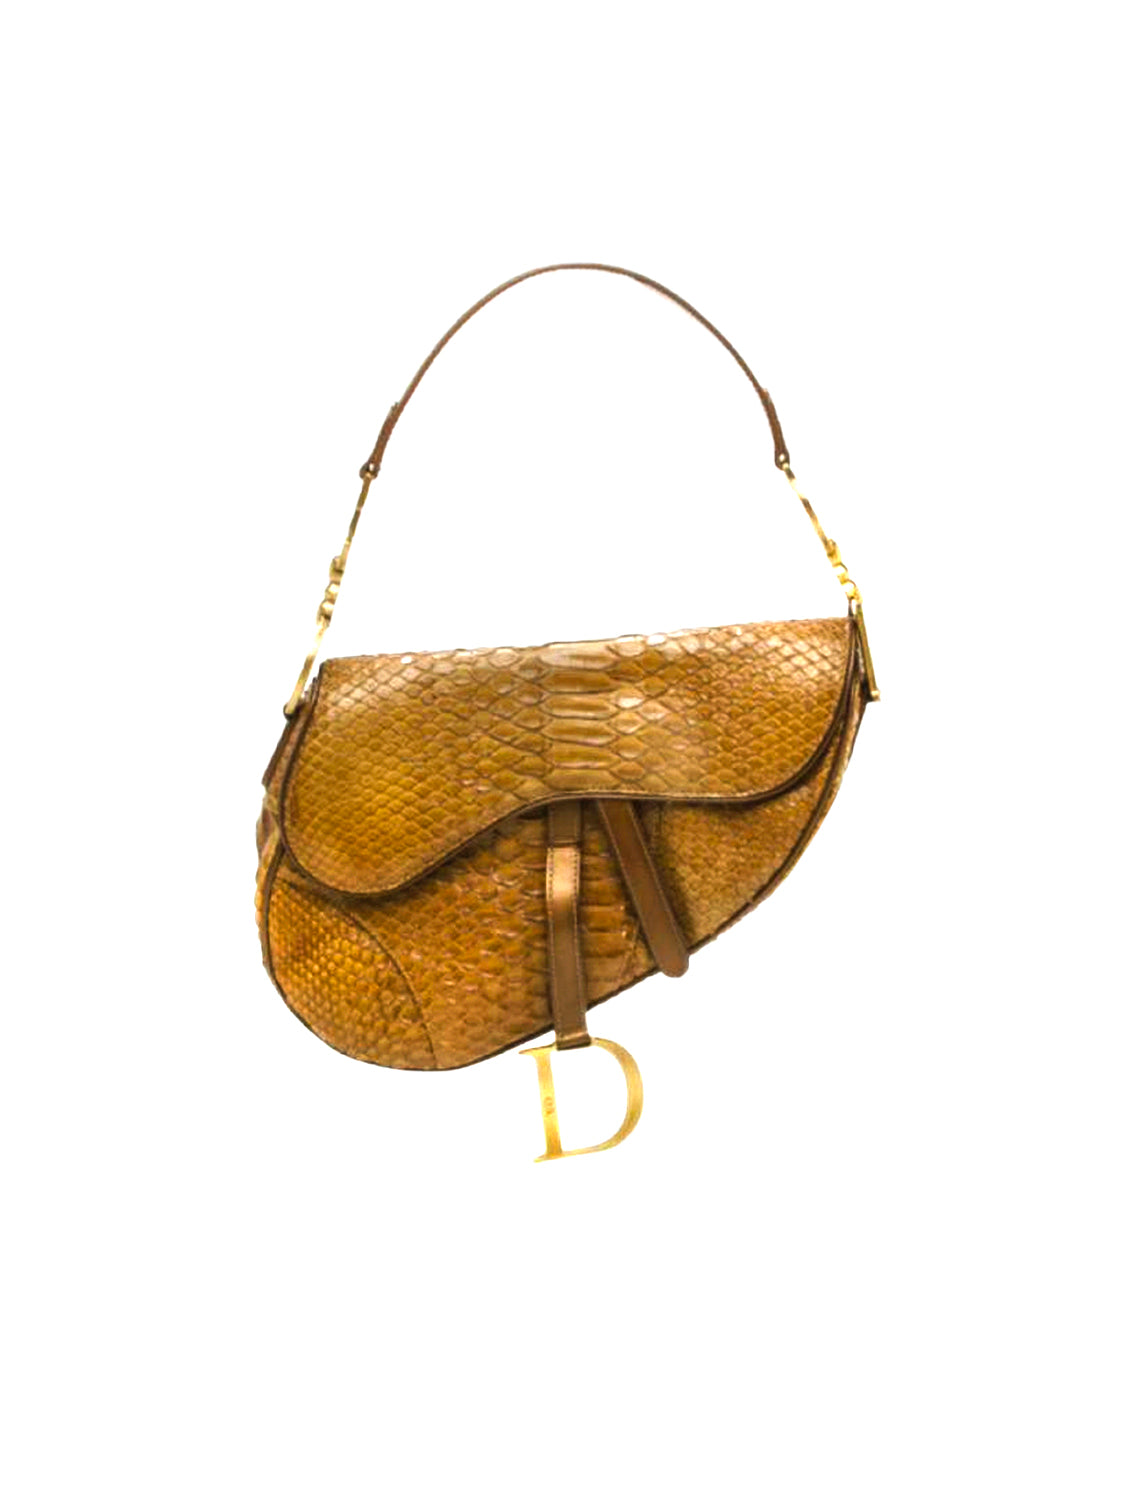 Christian Dior Python  Metallic Mahogany Patent Leather Saddle Bag  Lot  64607  Heritage Auctions